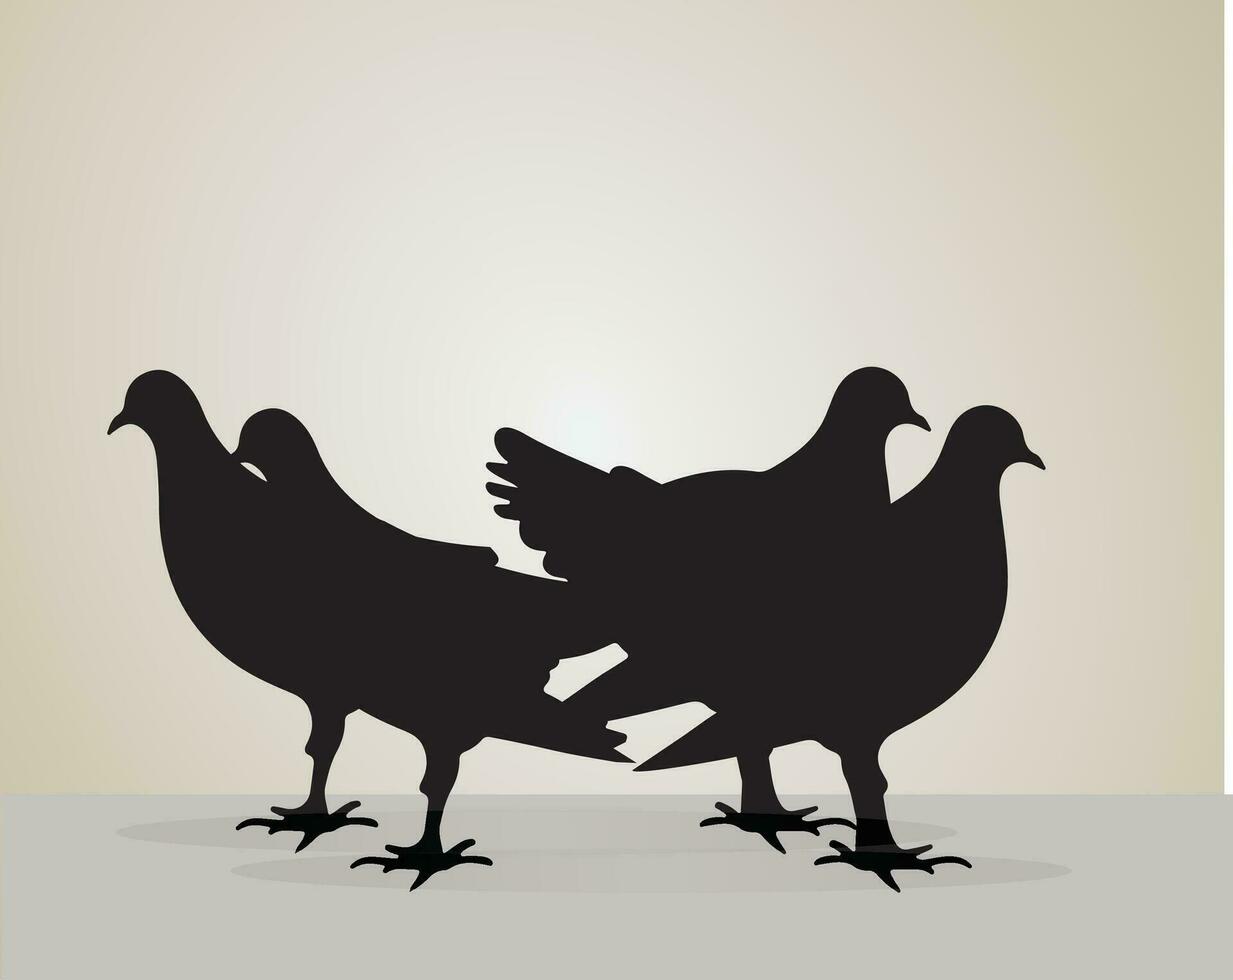 Peace Dove 9, Flying Bird, Black Silhouette, set of dove birds Vector Illustration isolated on white background